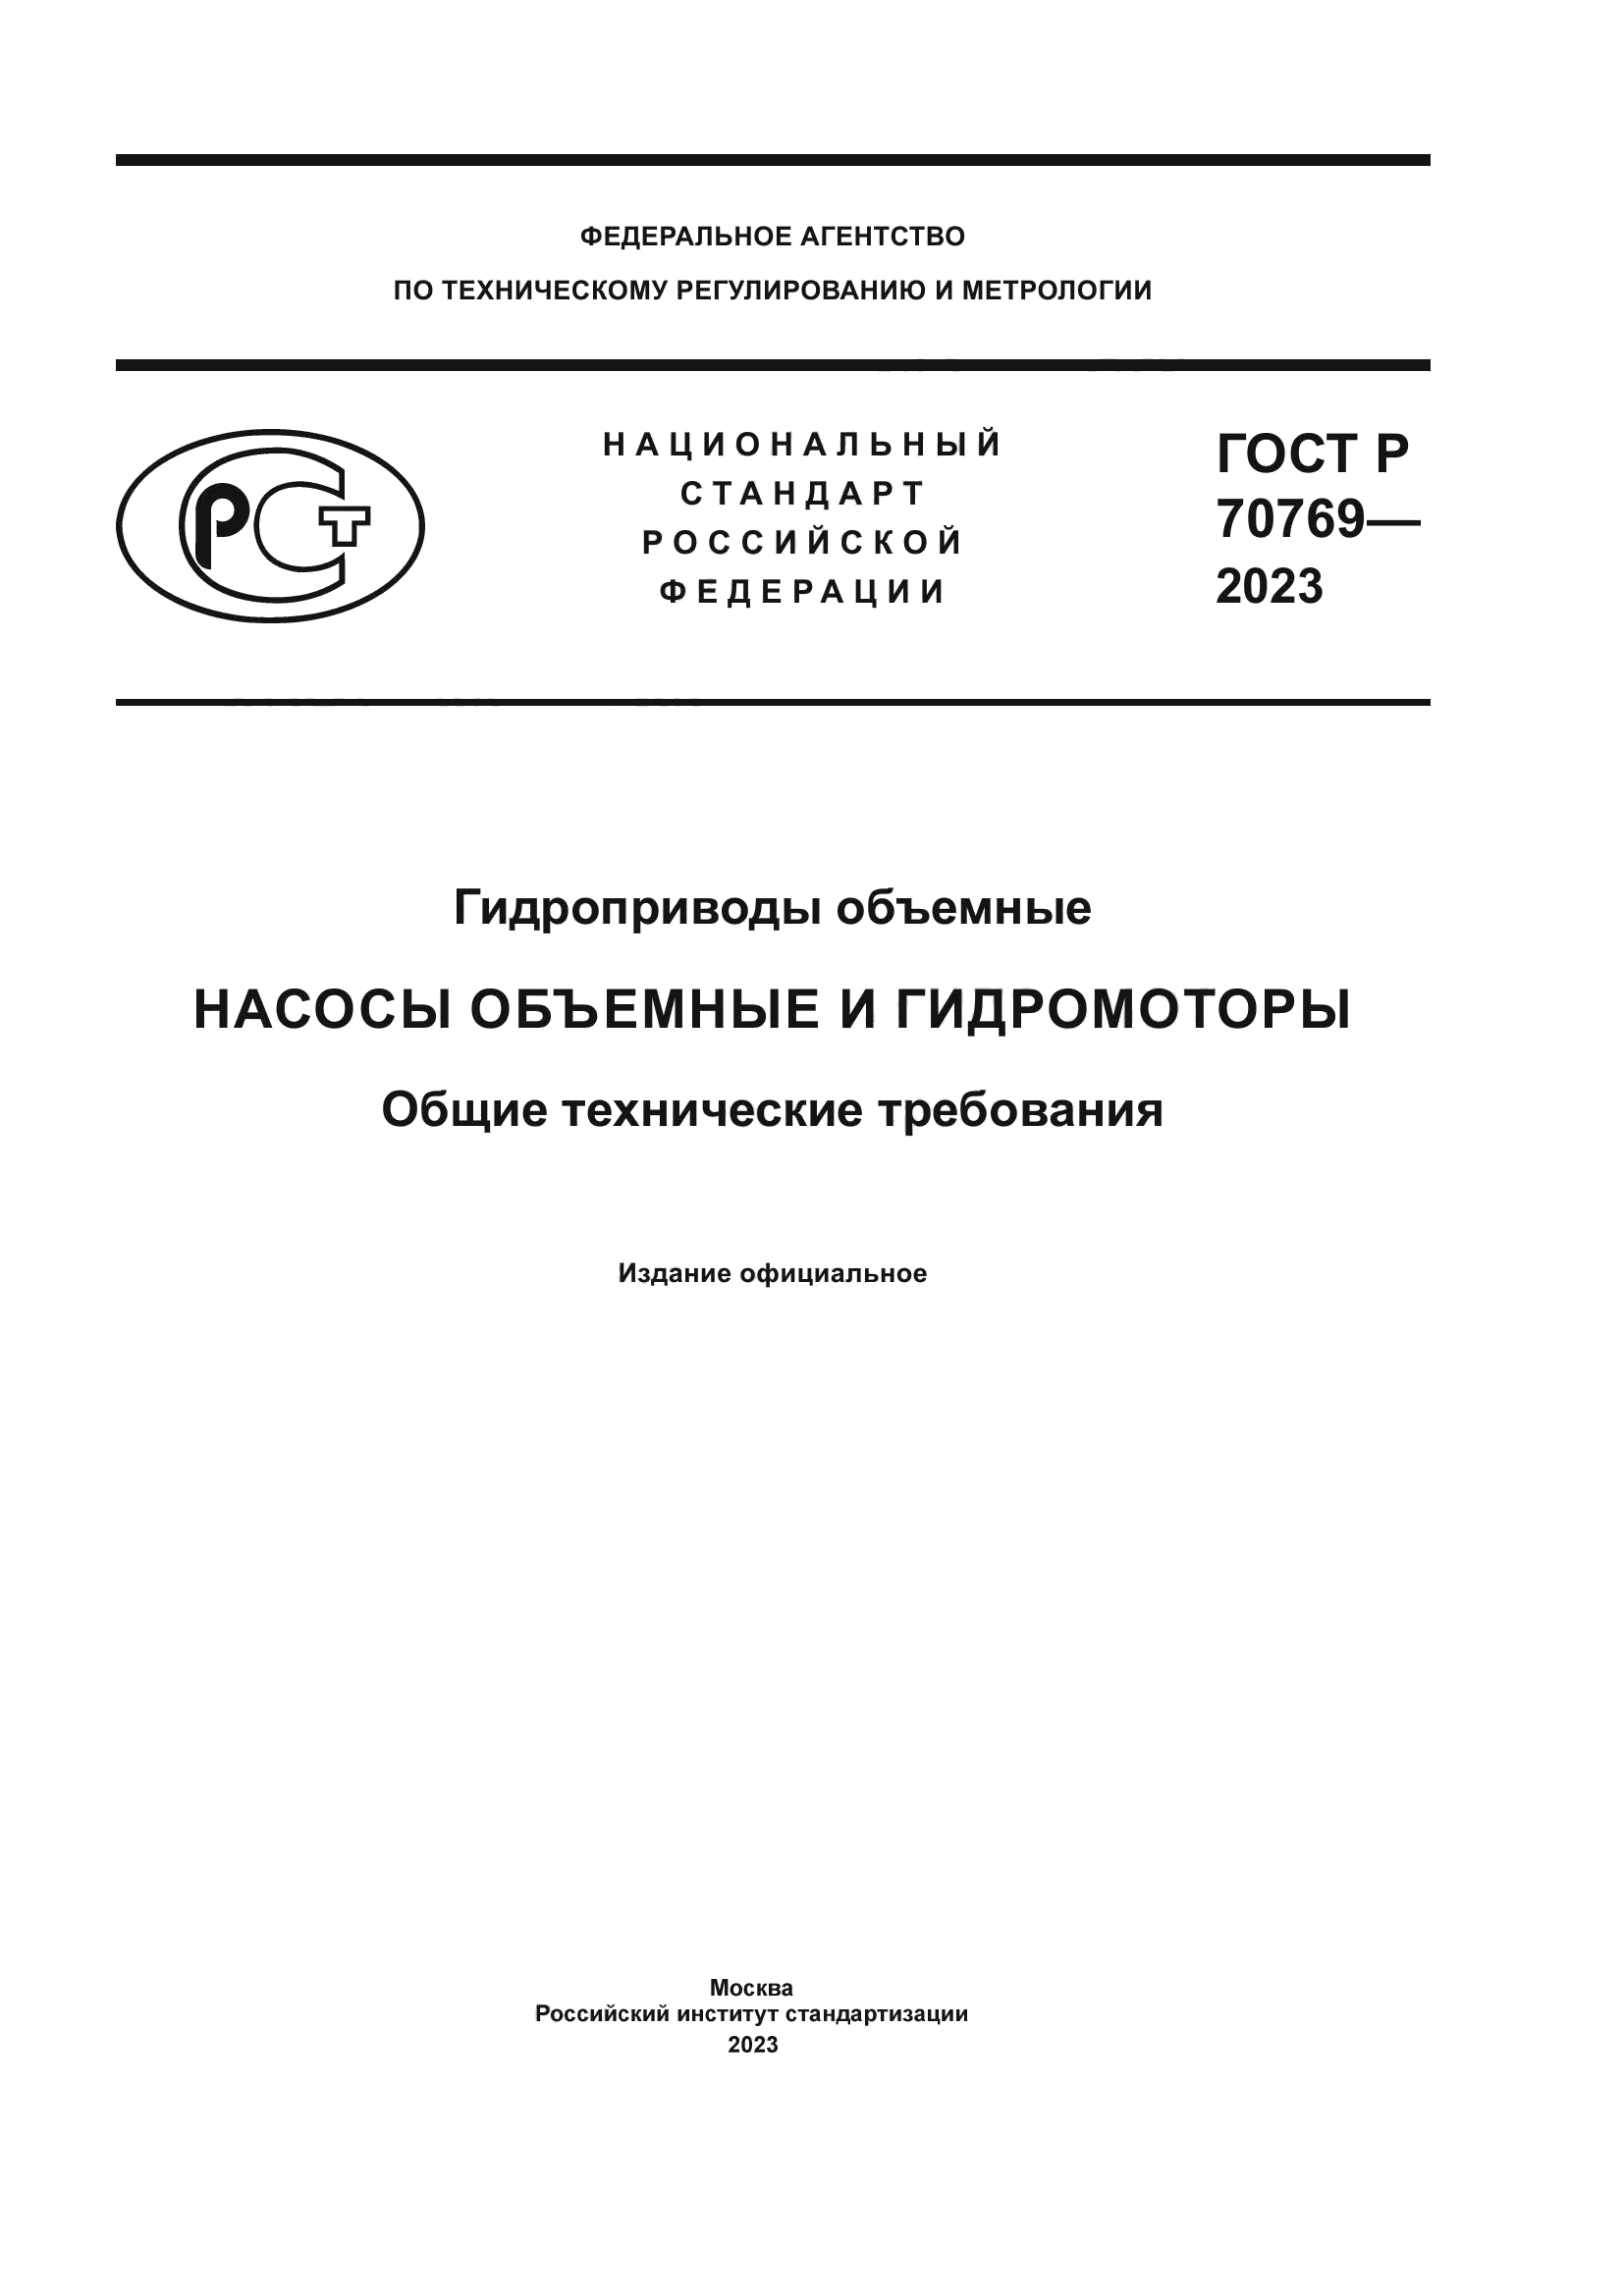 ГОСТ Р 70769-2023